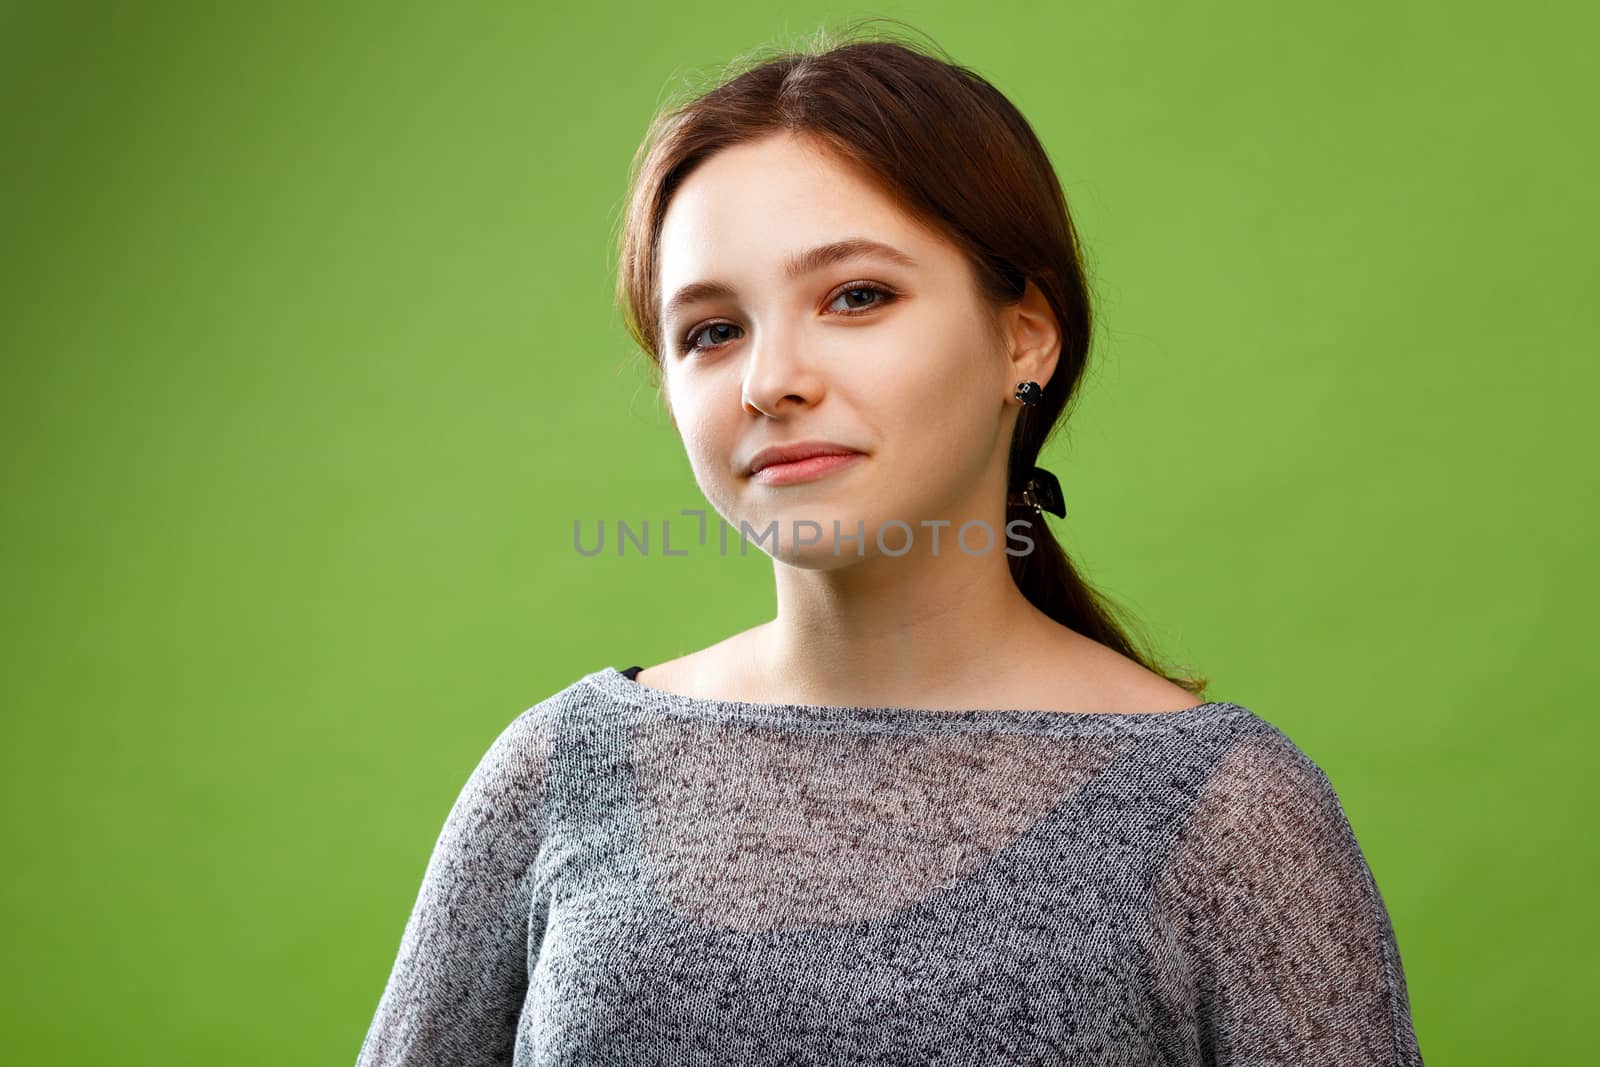 Teenage girl on green background by DmitryOsipov